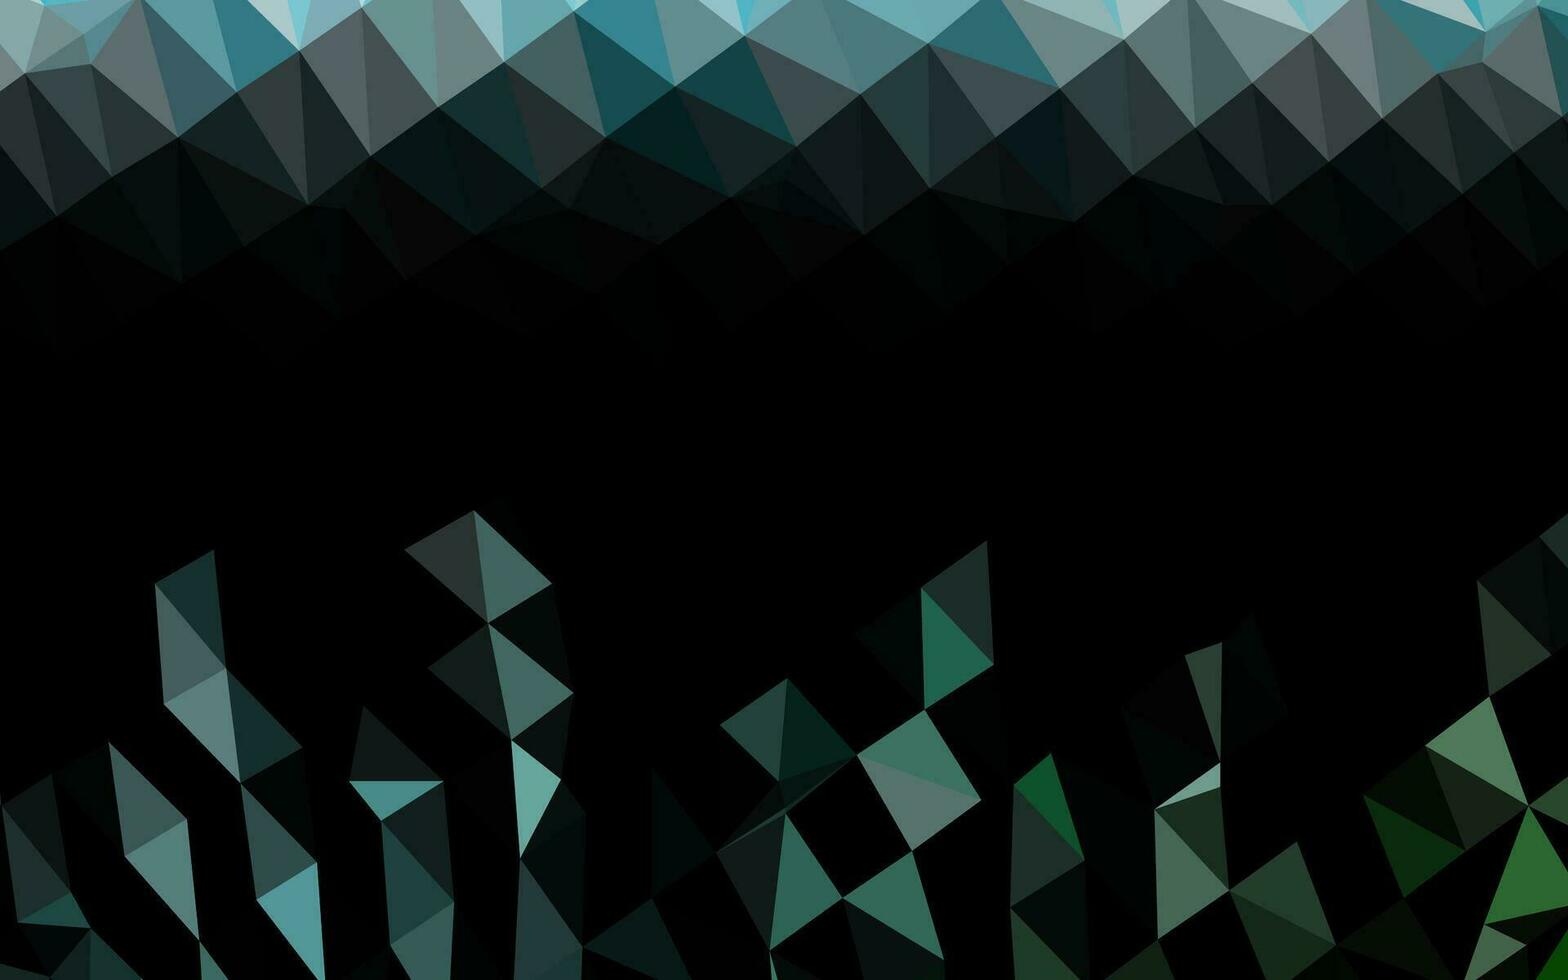 lichtblauwe, groene vector driehoek mozaïek textuur.